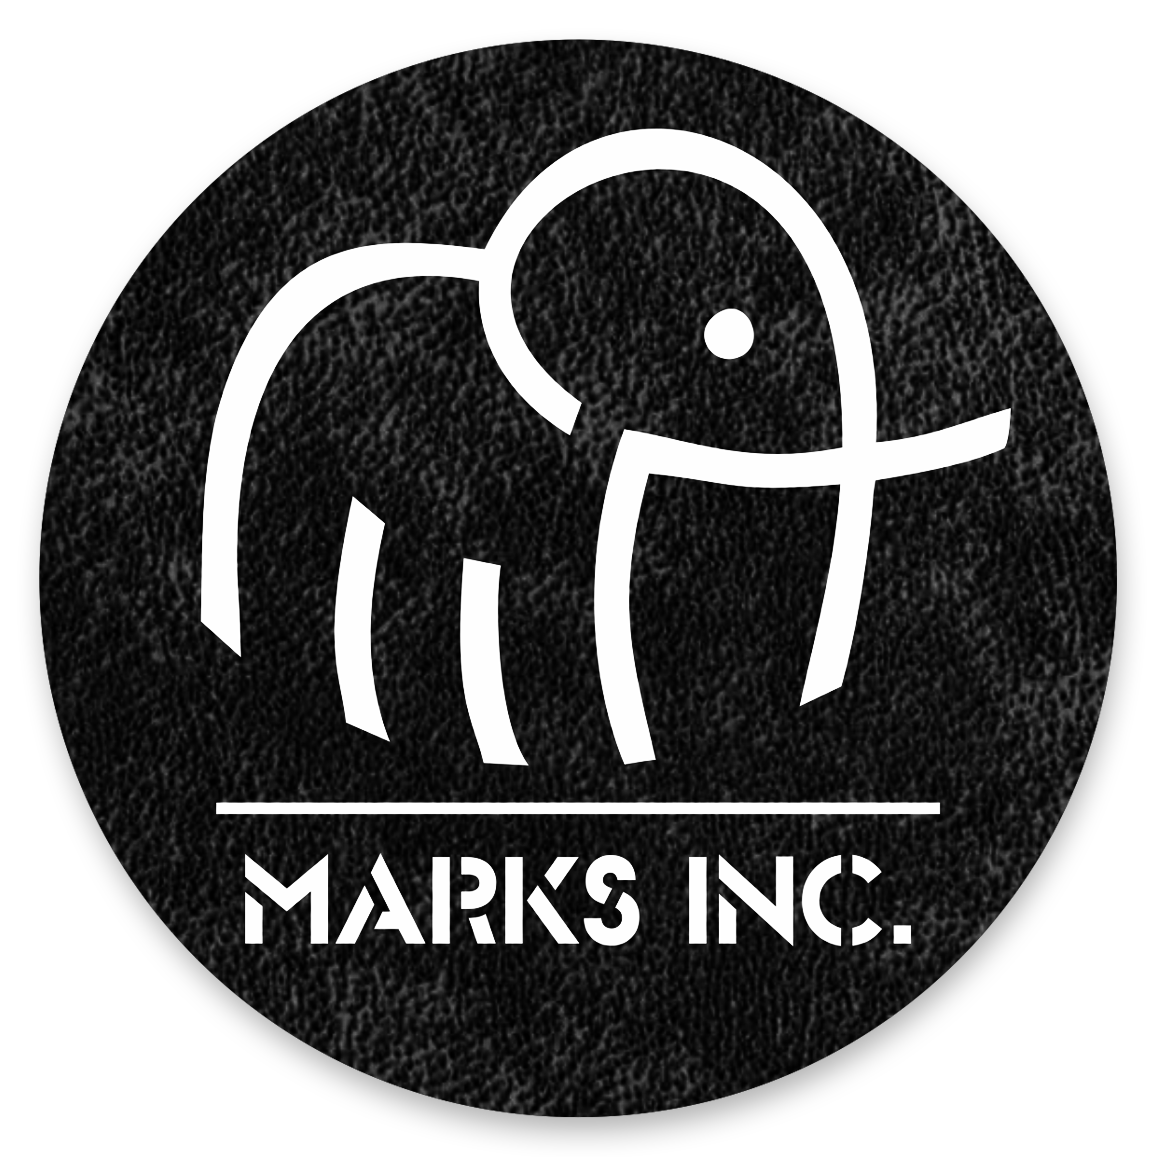 Marks Inc.